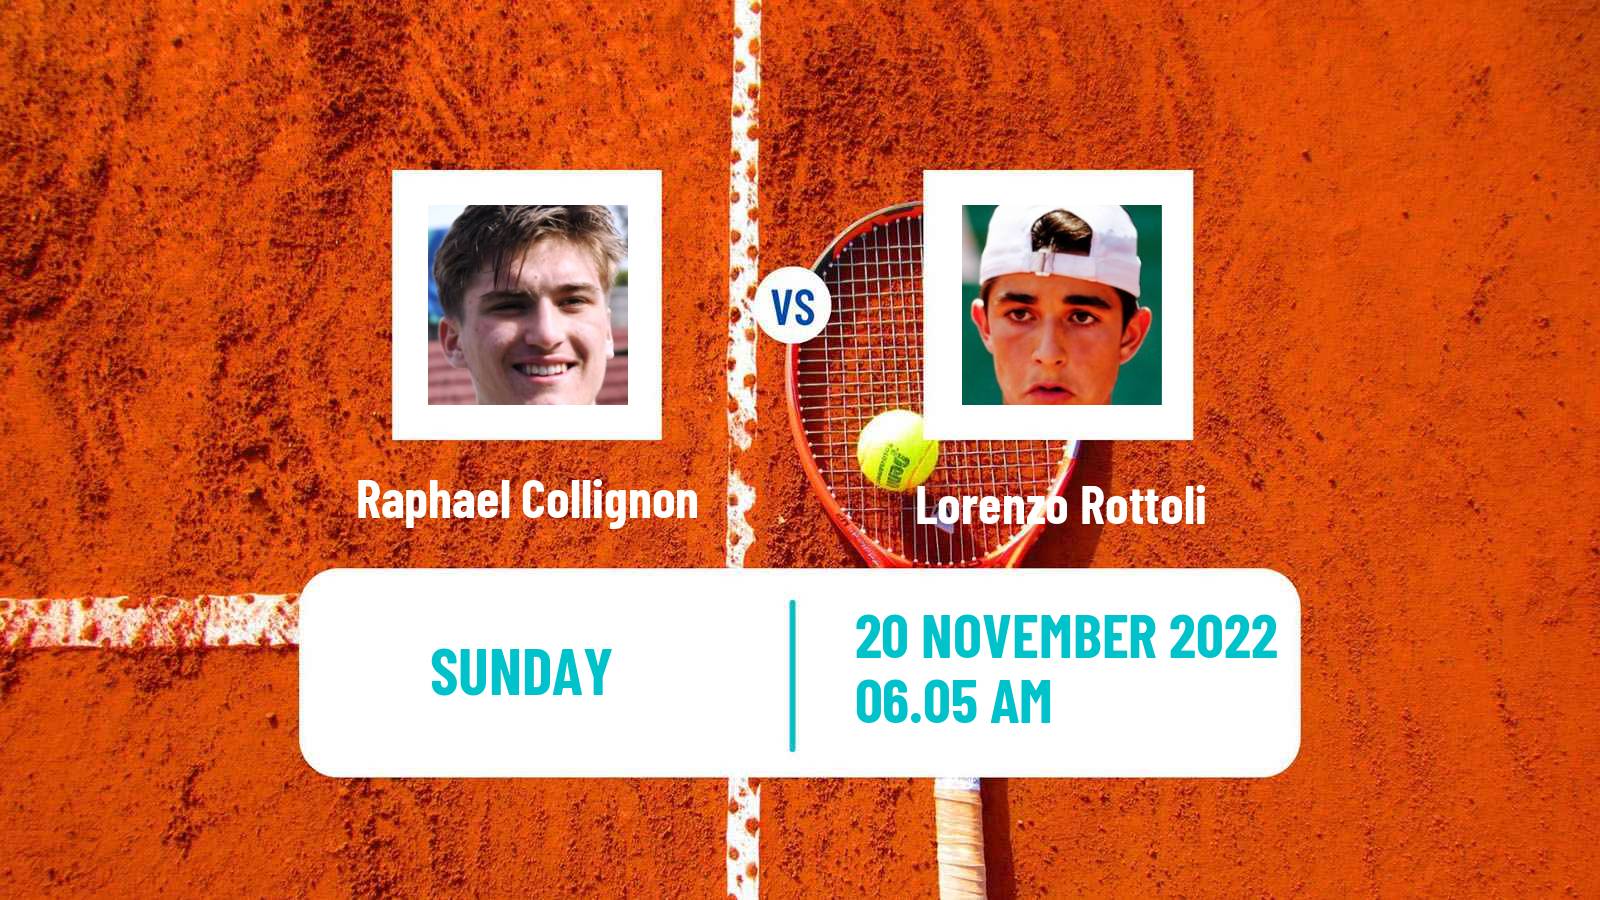 Tennis ATP Challenger Raphael Collignon - Lorenzo Rottoli